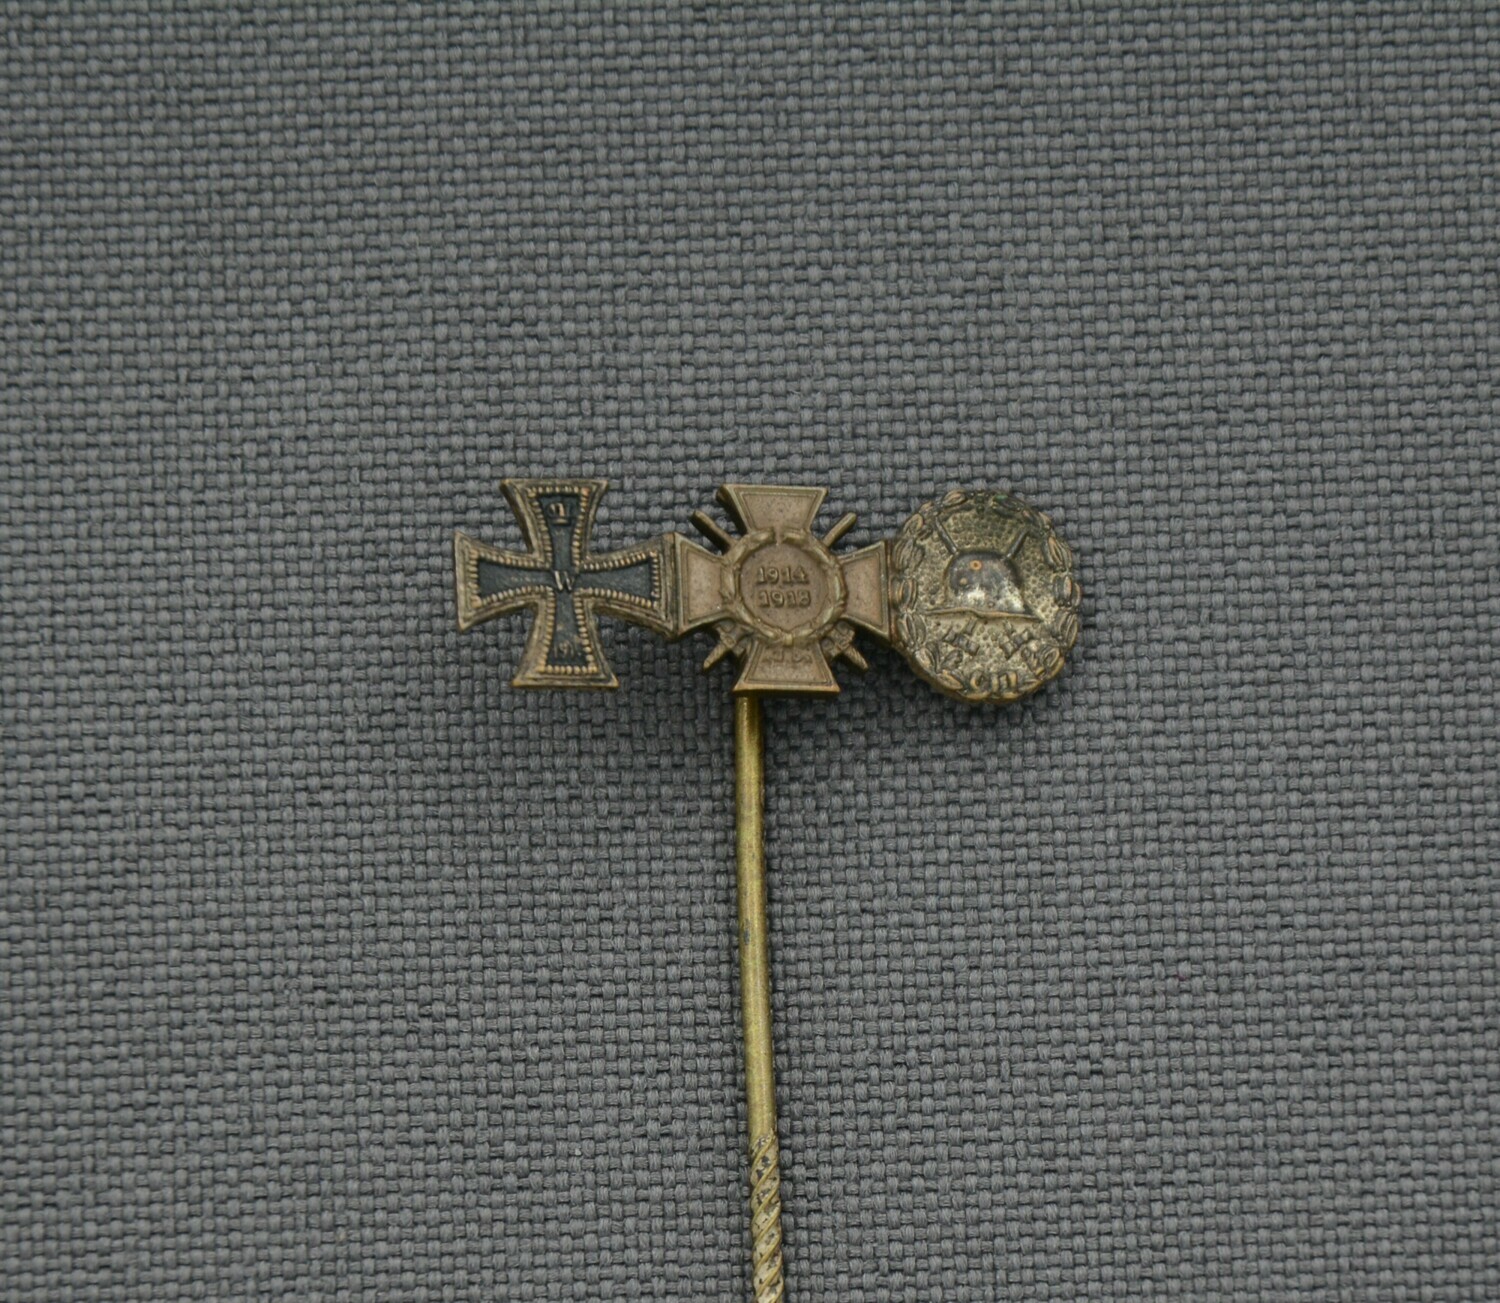 WWI Medal Bar Stickpin